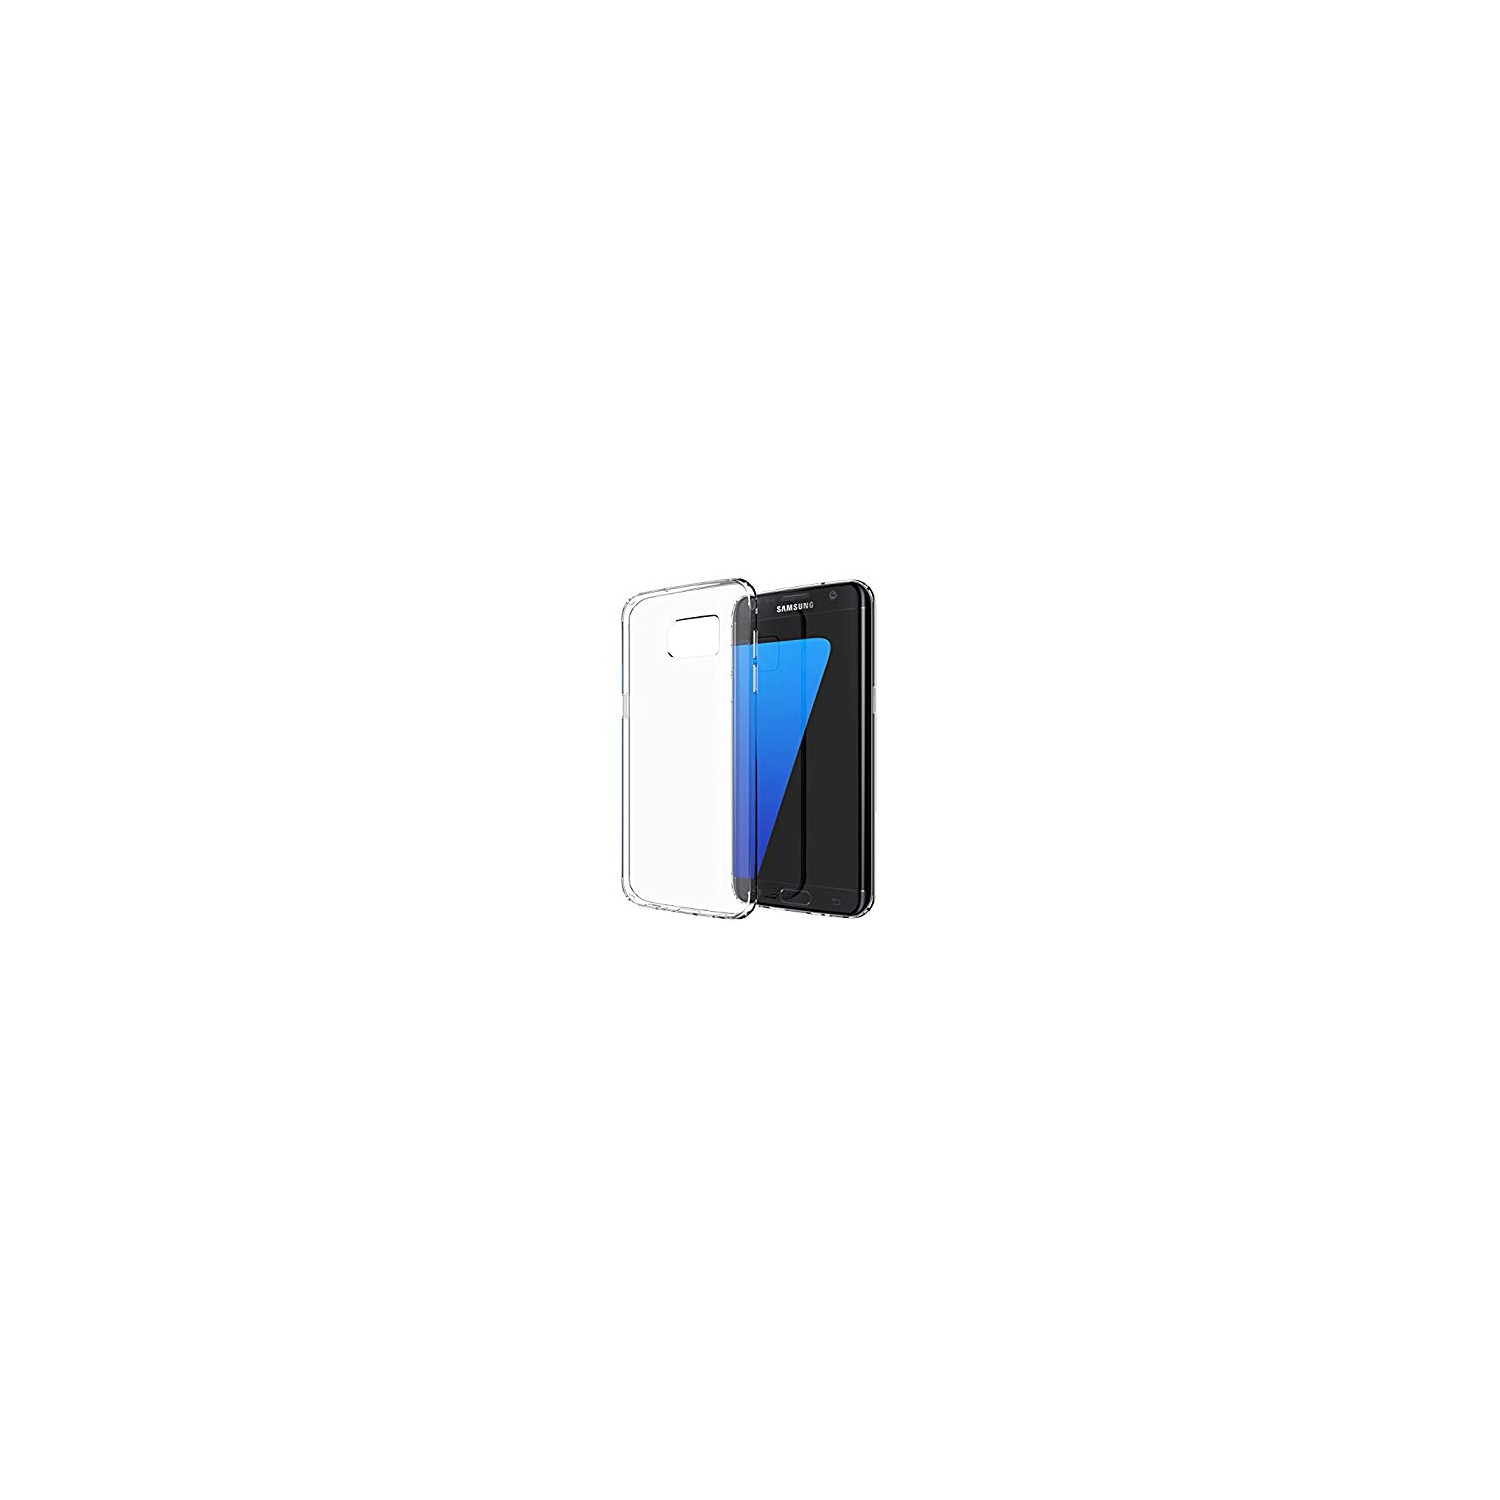 Samsung Galaxy S7 Edge Case - Inskin [Crystalline] Scratch Resistant Clear Hybrid Case for Samsung® Galaxy® S7 Edge 5.5' [NOT